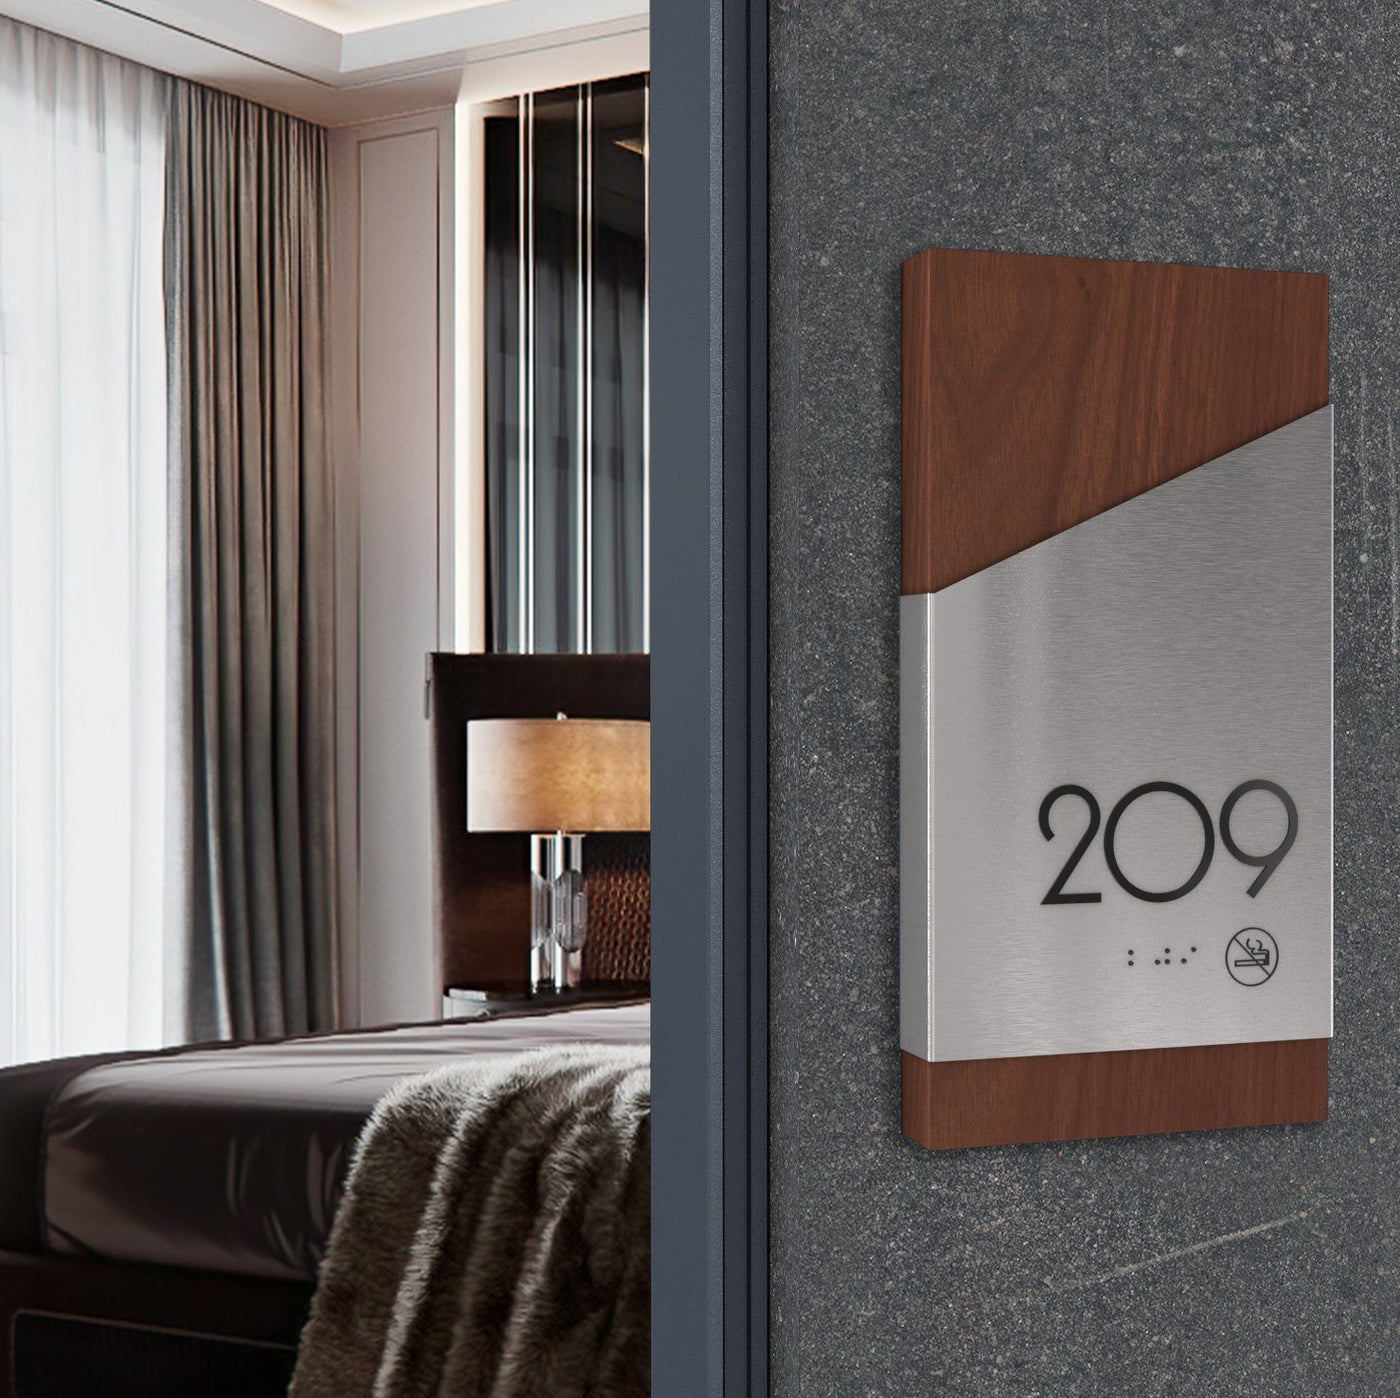 Hotel Room Number Sign — Stainless steel & Wood Door Plate